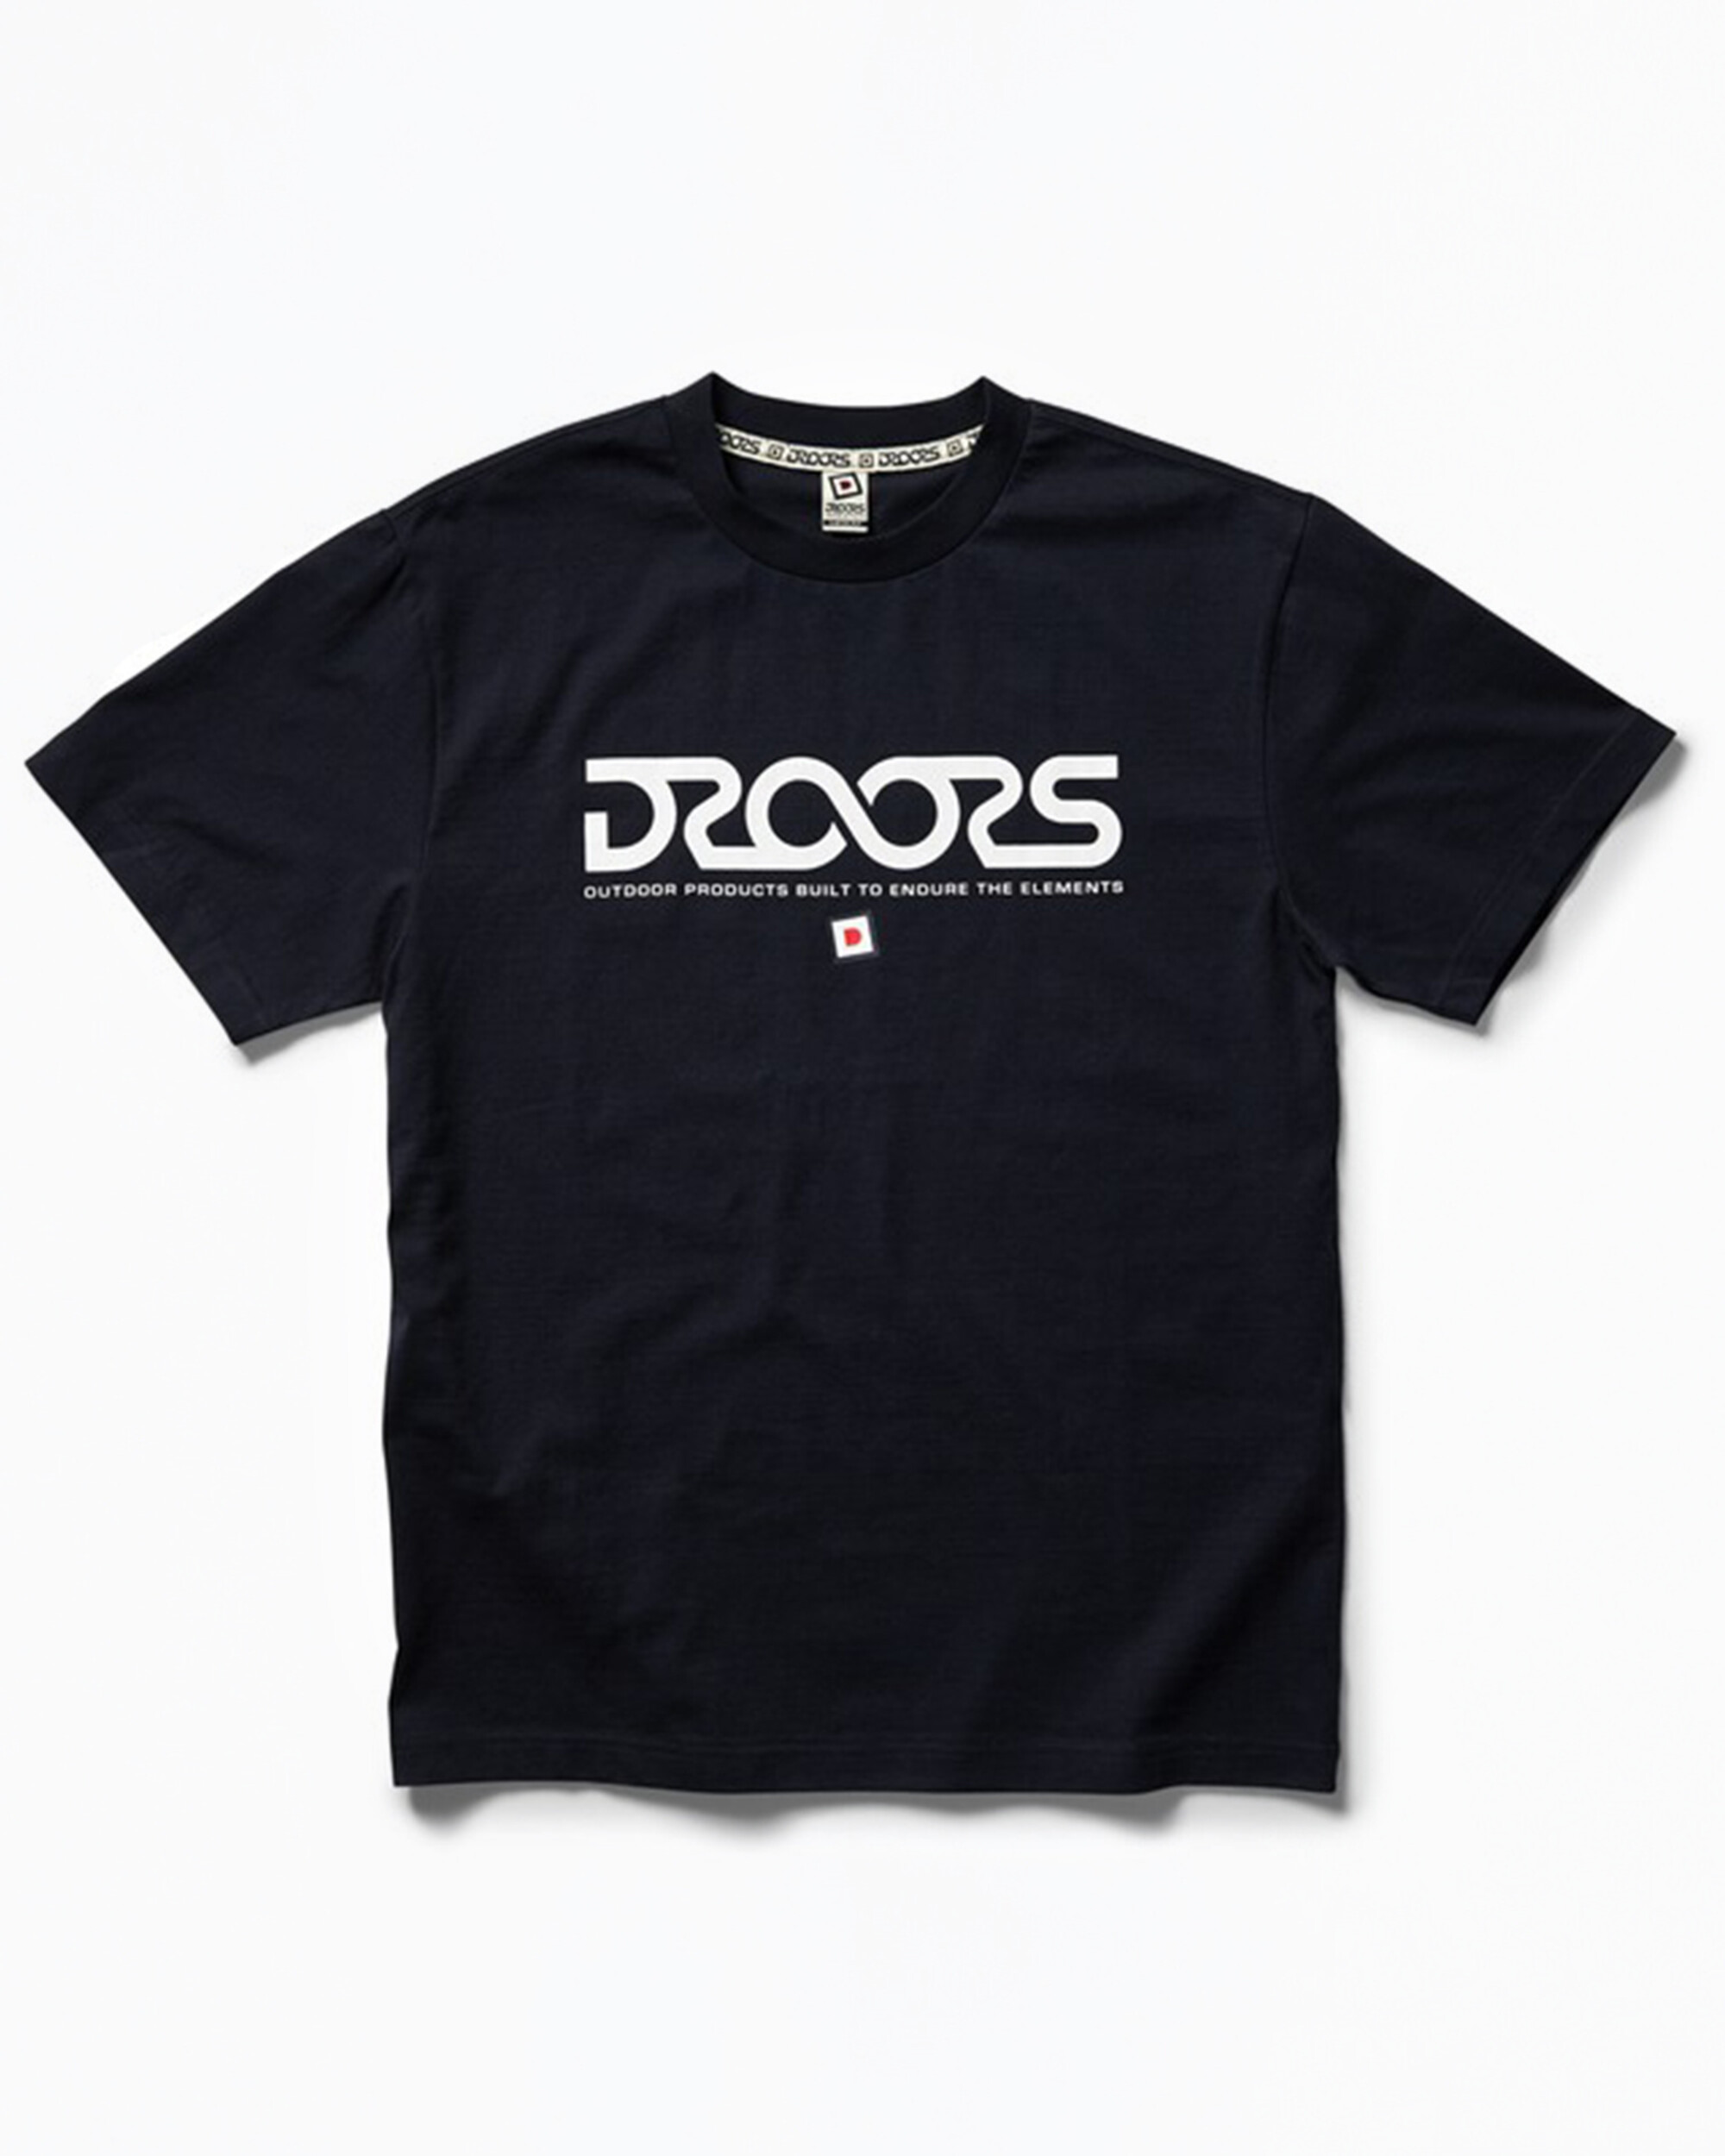 DROORS Infinity Ring T-Shirt Navy